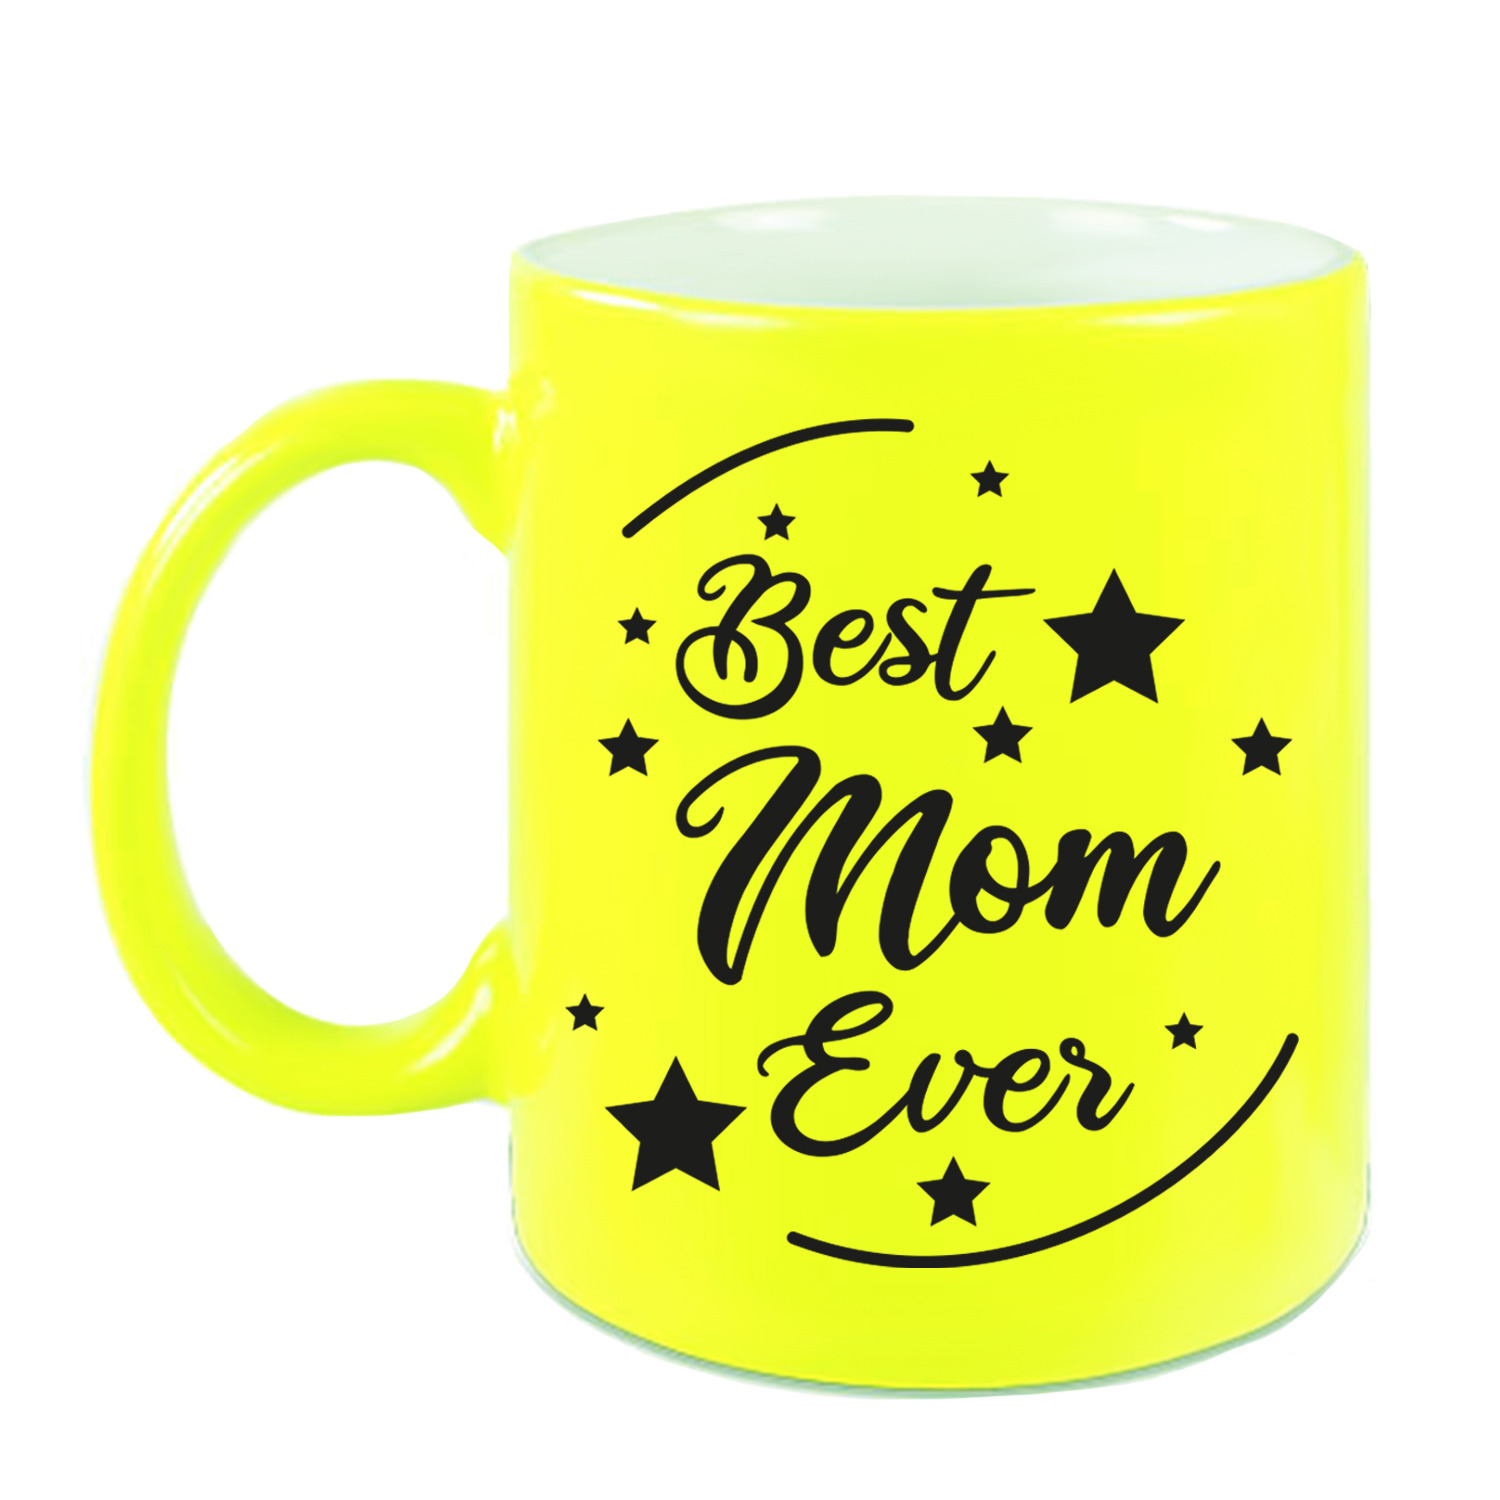 Best Mom Ever cadeau koffiemok / theebeker neon geel 330 ml